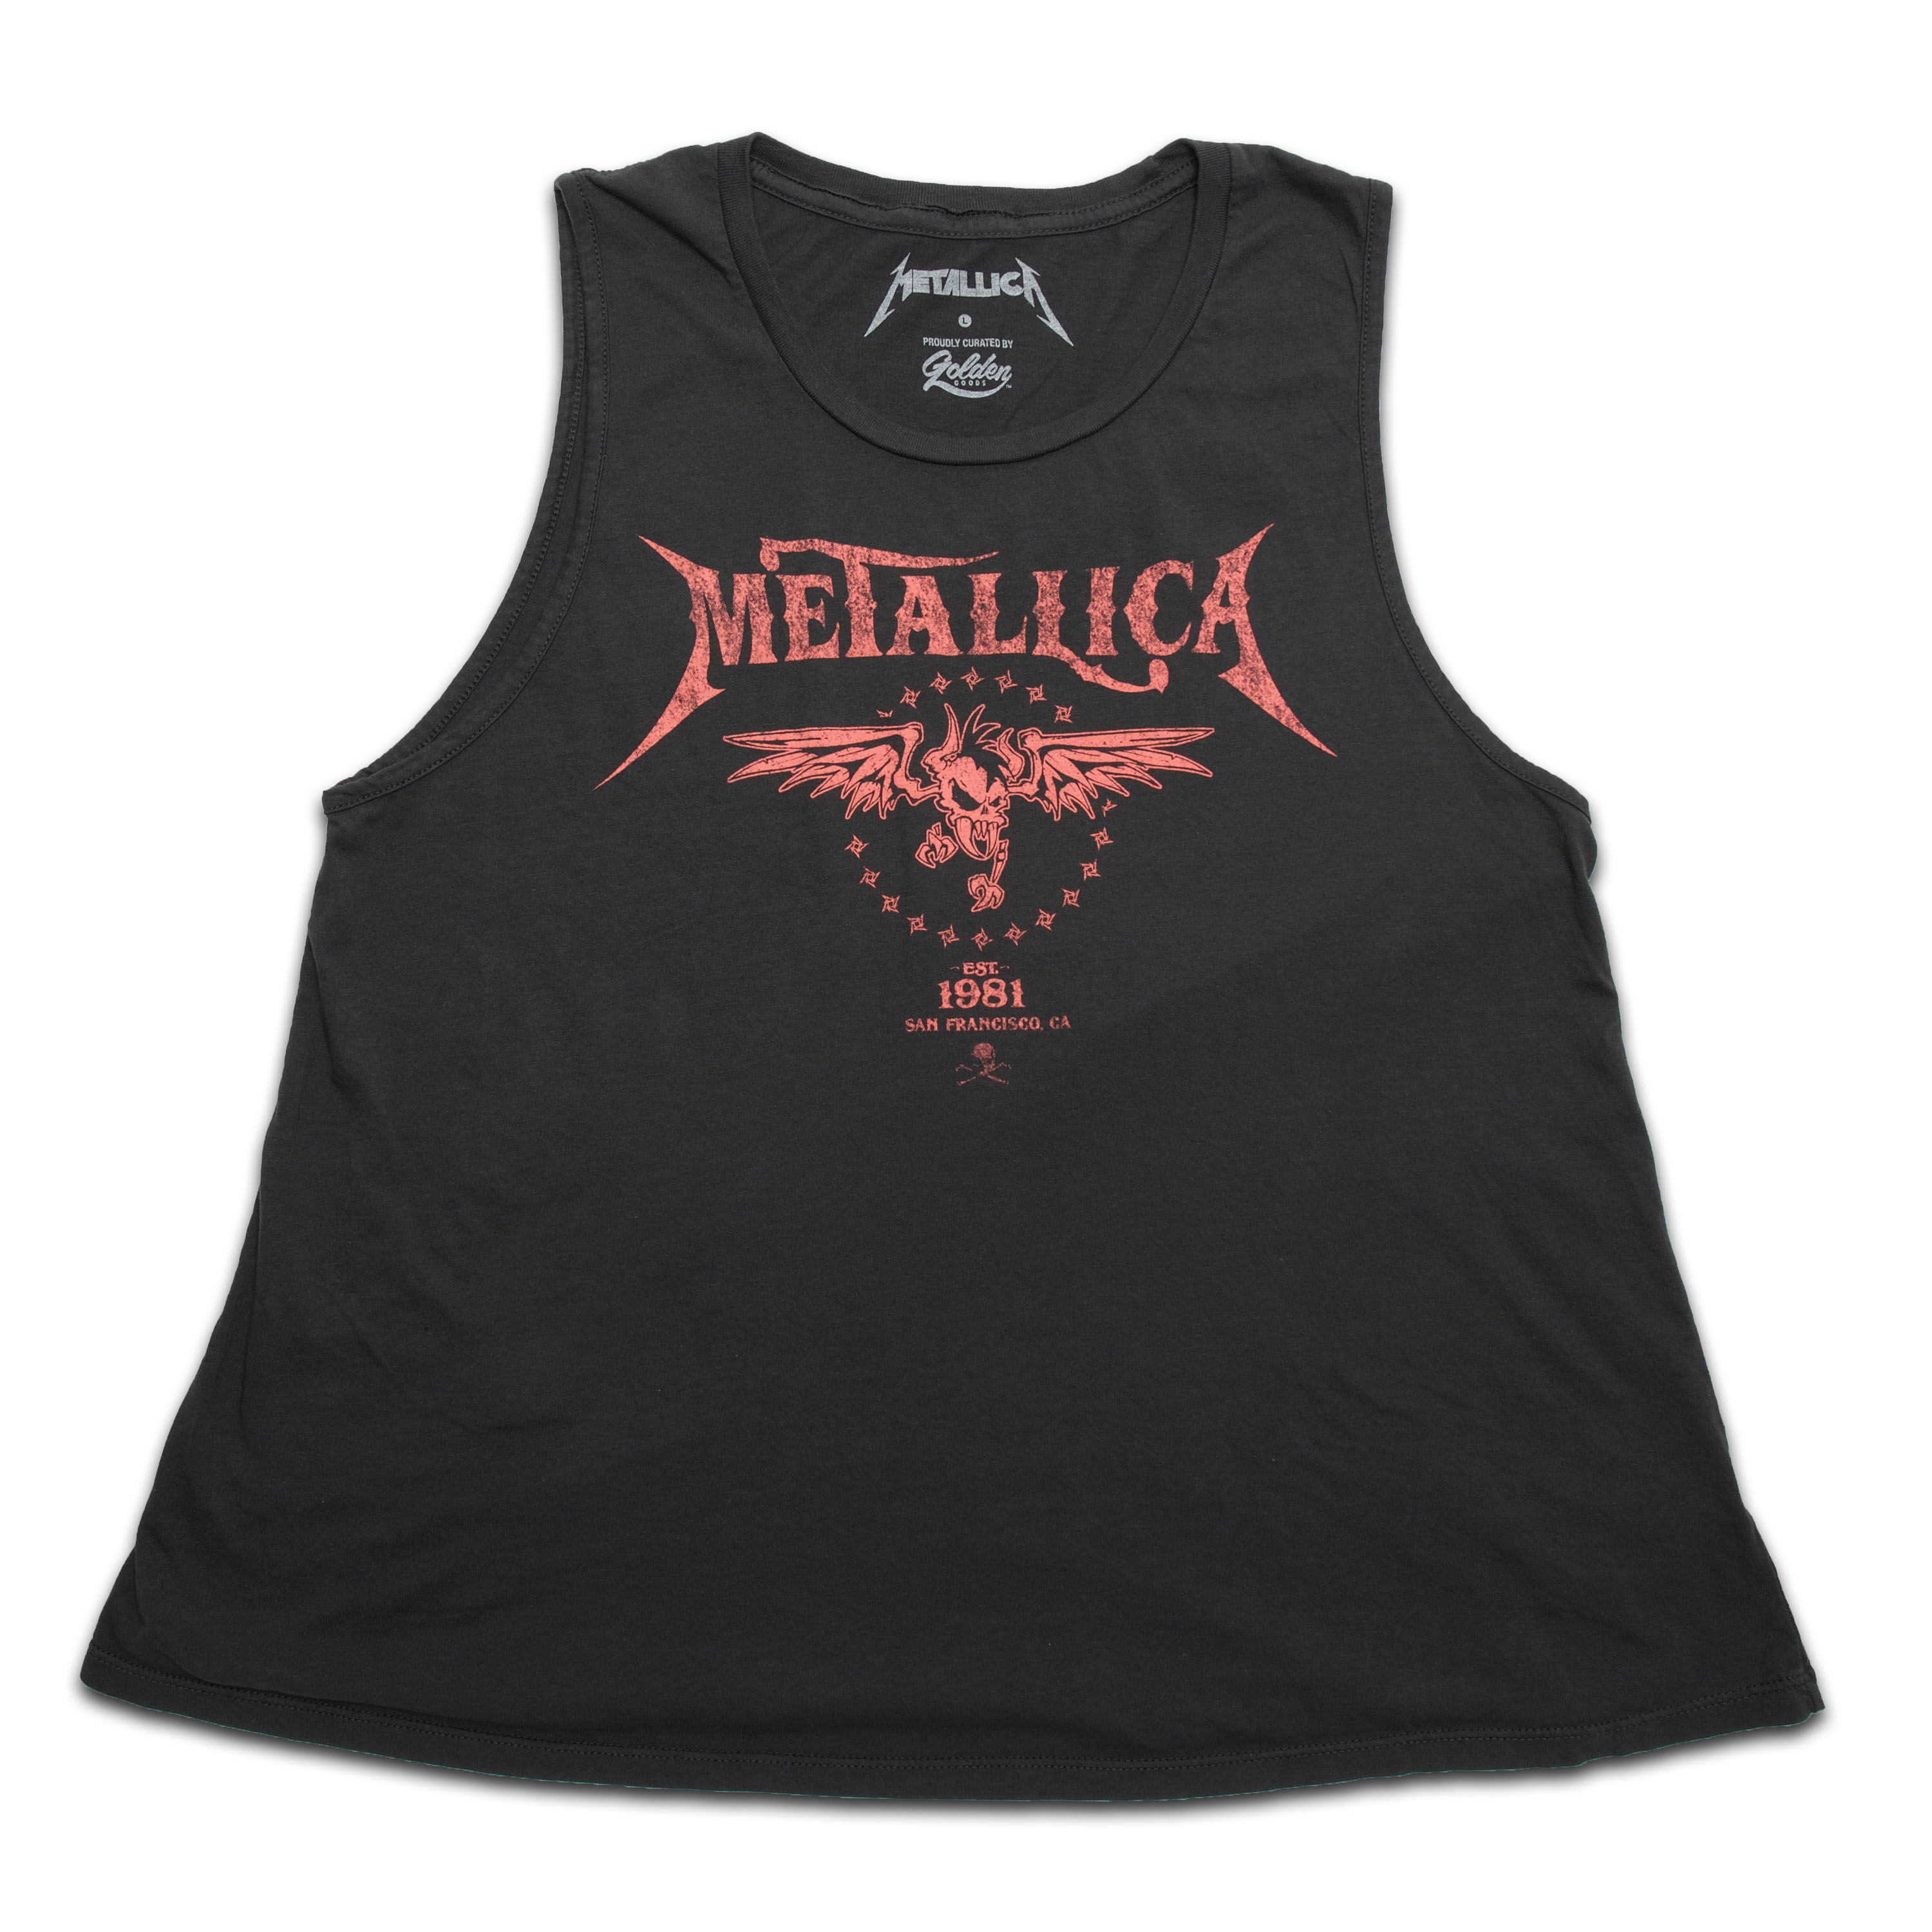 Kleding Gender-neutrale kleding volwassenen Tops & T-shirts Tanktops Tanktops met print Distressed Metallica Cut Off Tee 